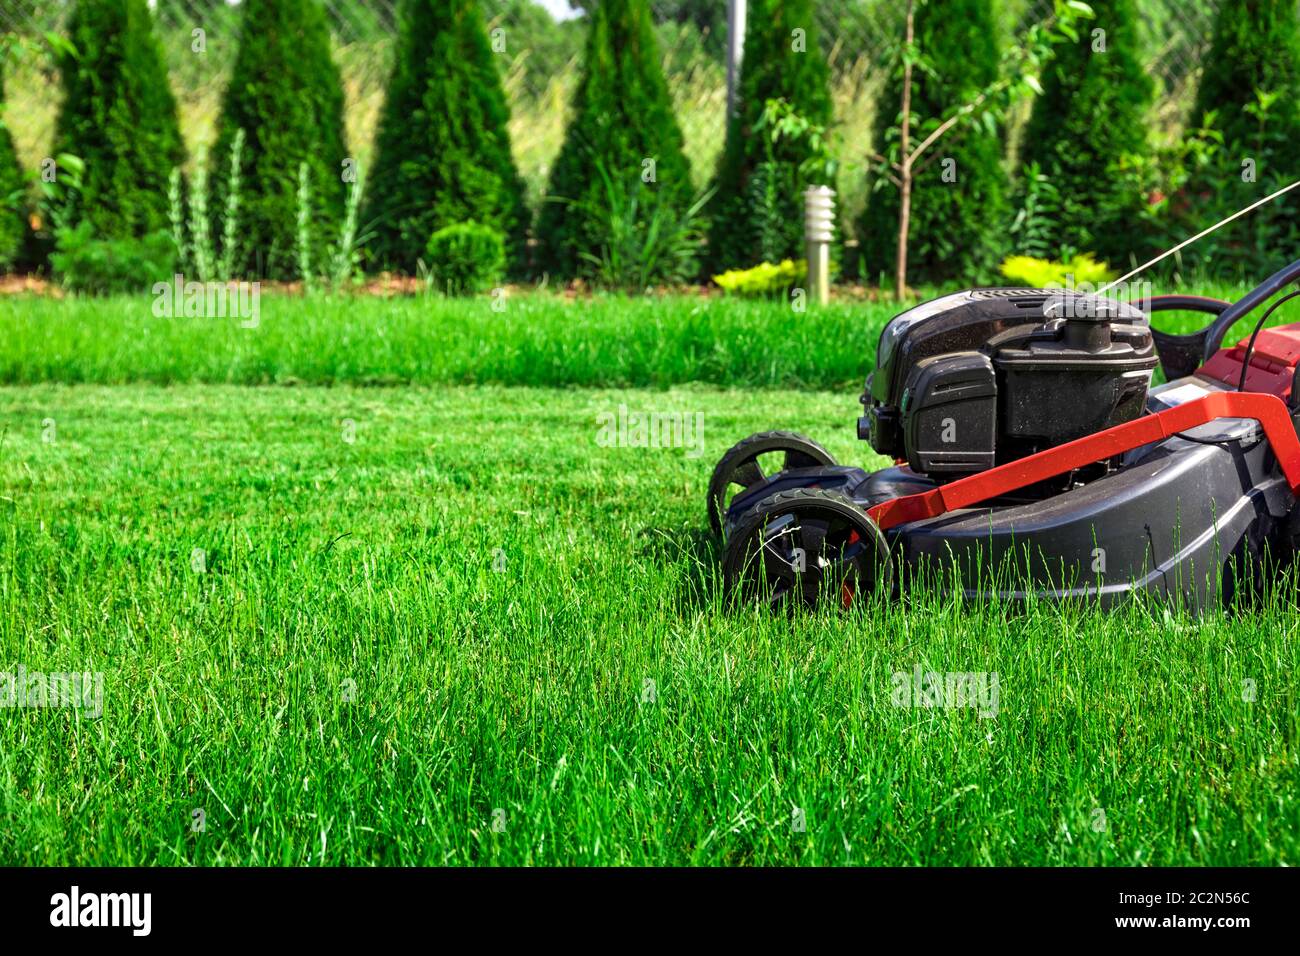 Lawn mower cutting tall green grass in backyard Stock Photo